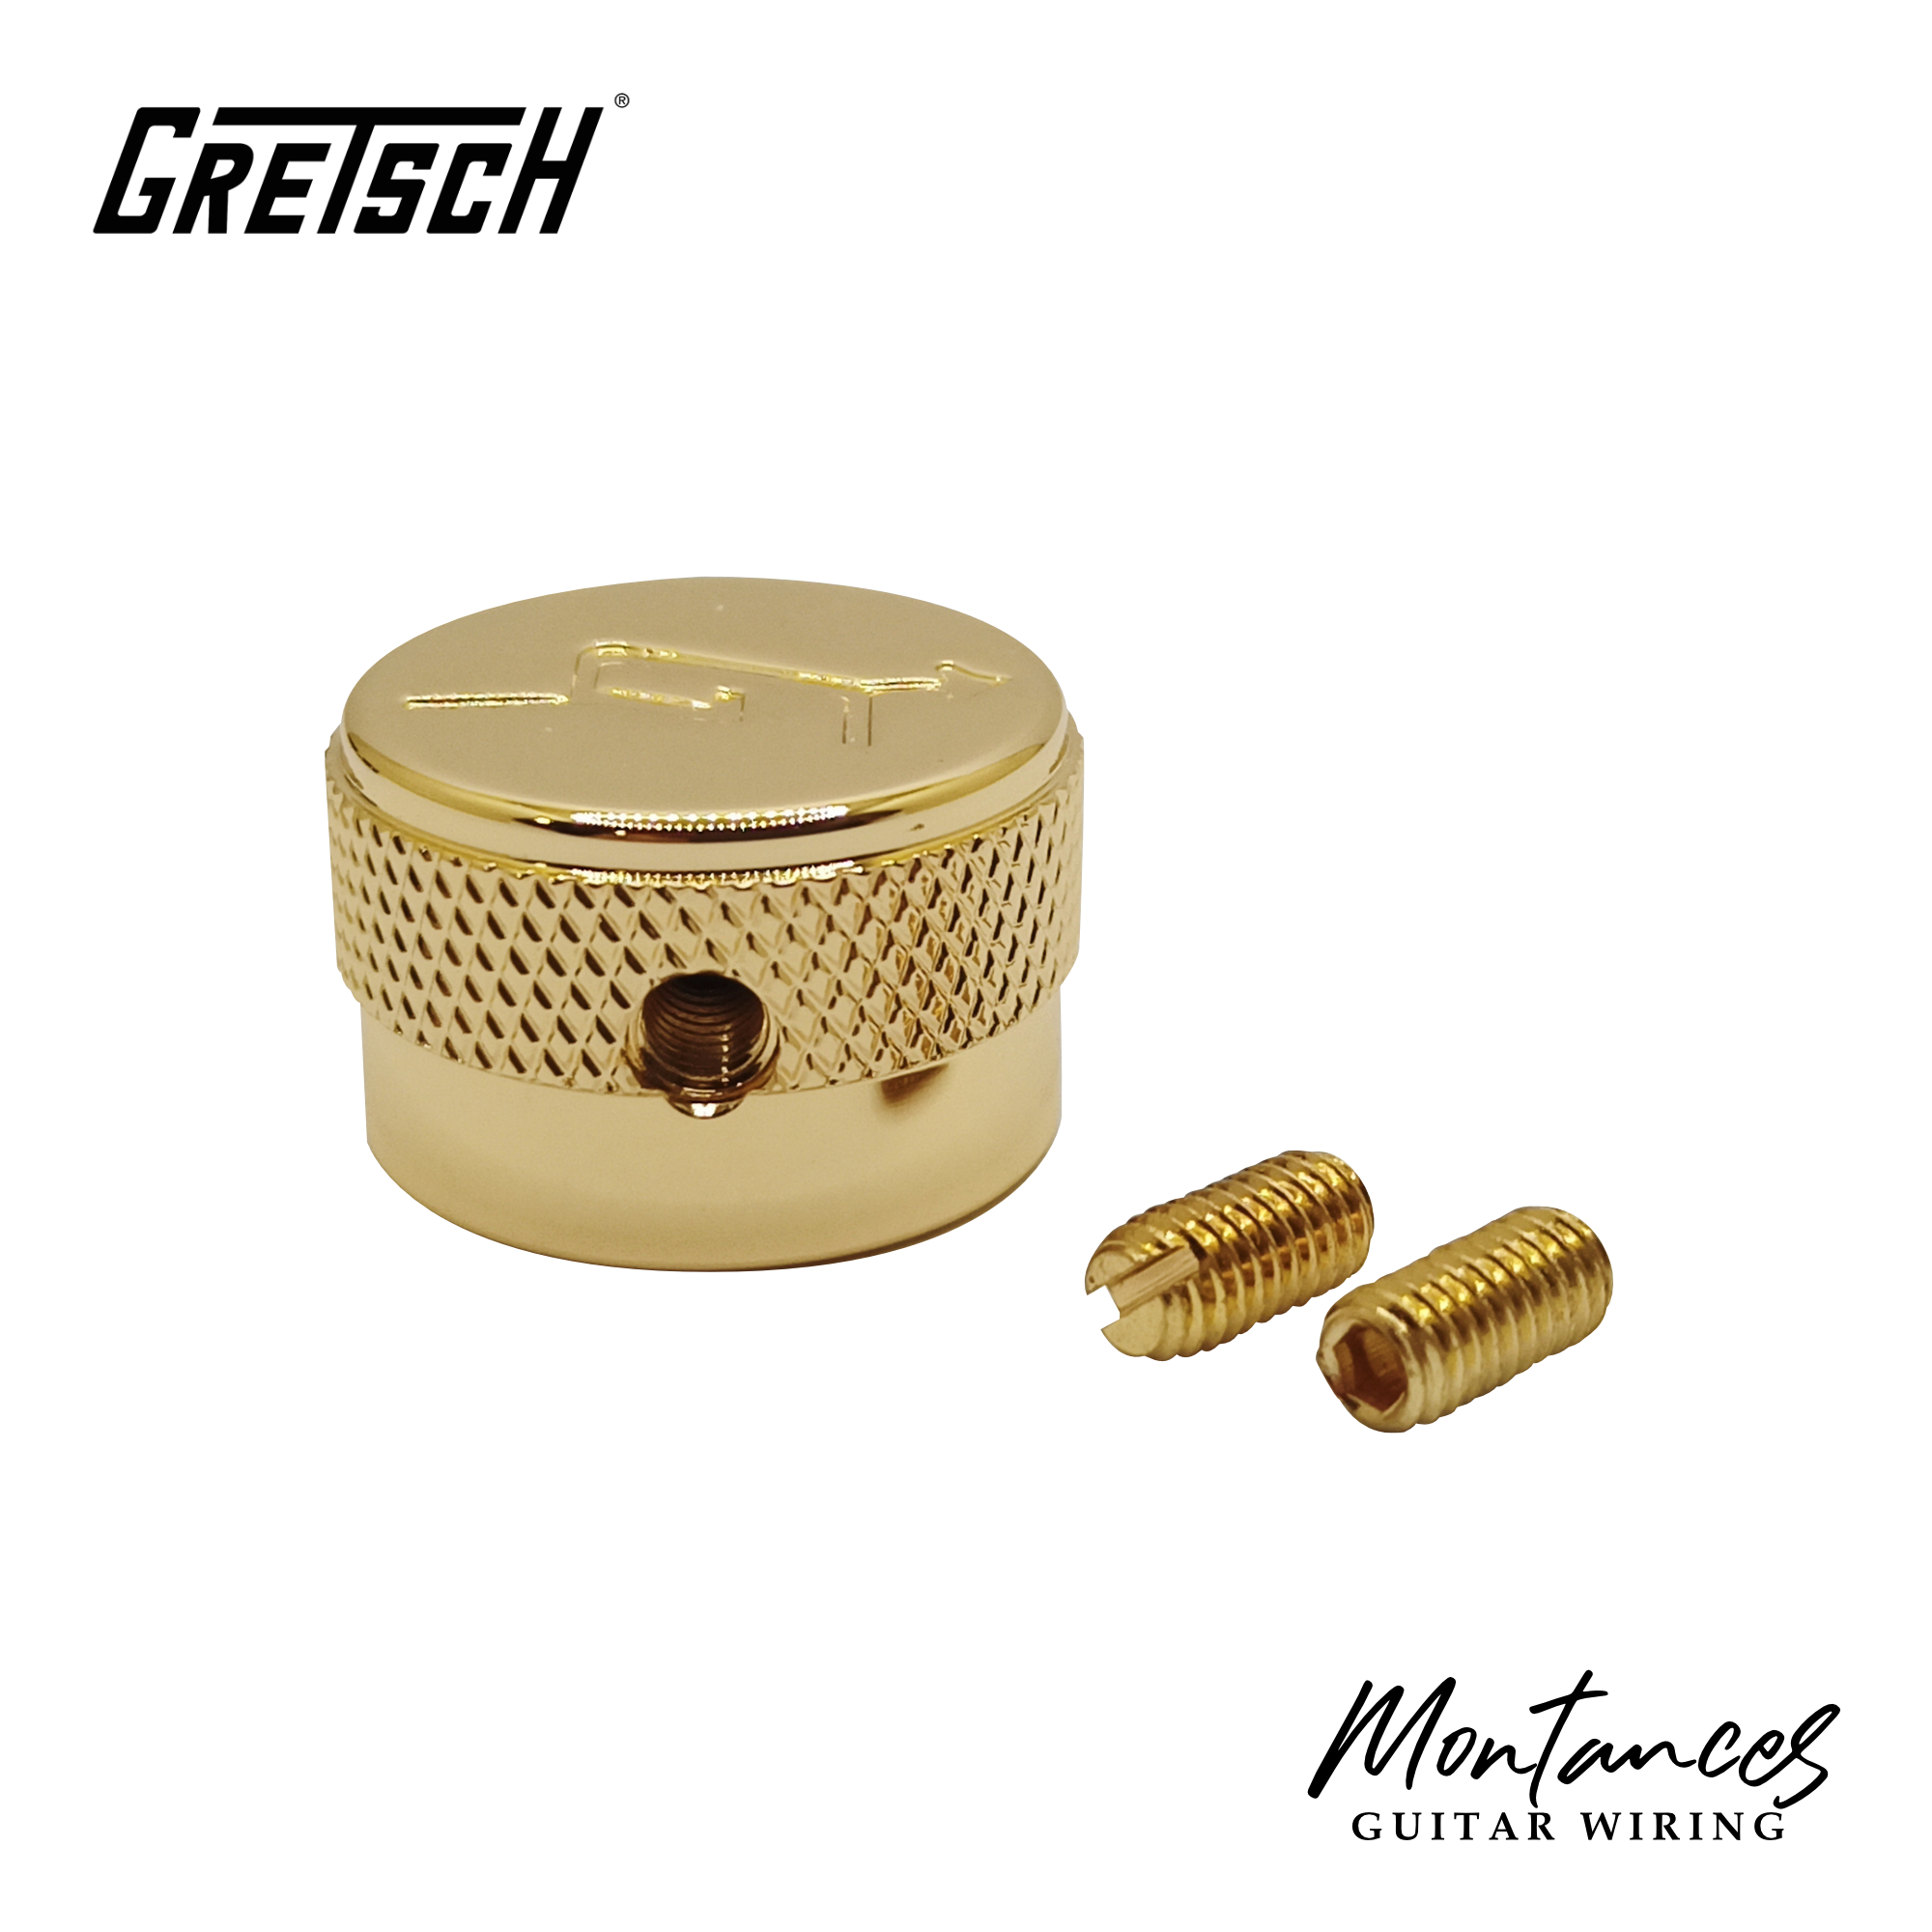 Gretsch® Metal Knobs 6.0mm